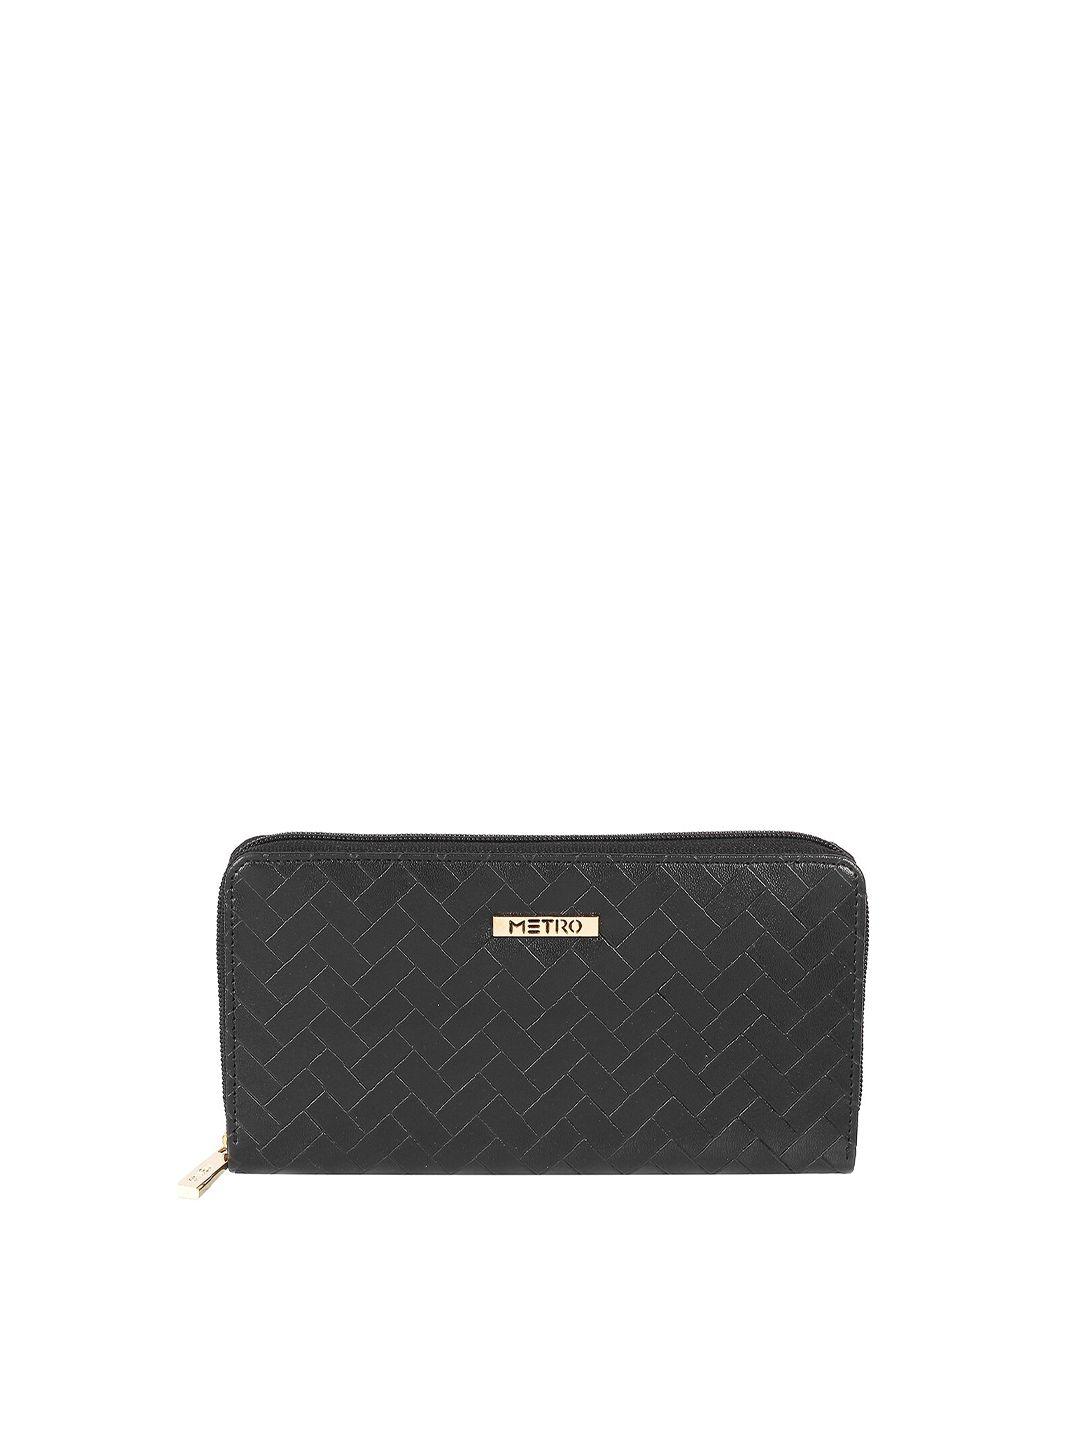 metro-women-black-geometric-textured-zip-around-wallet